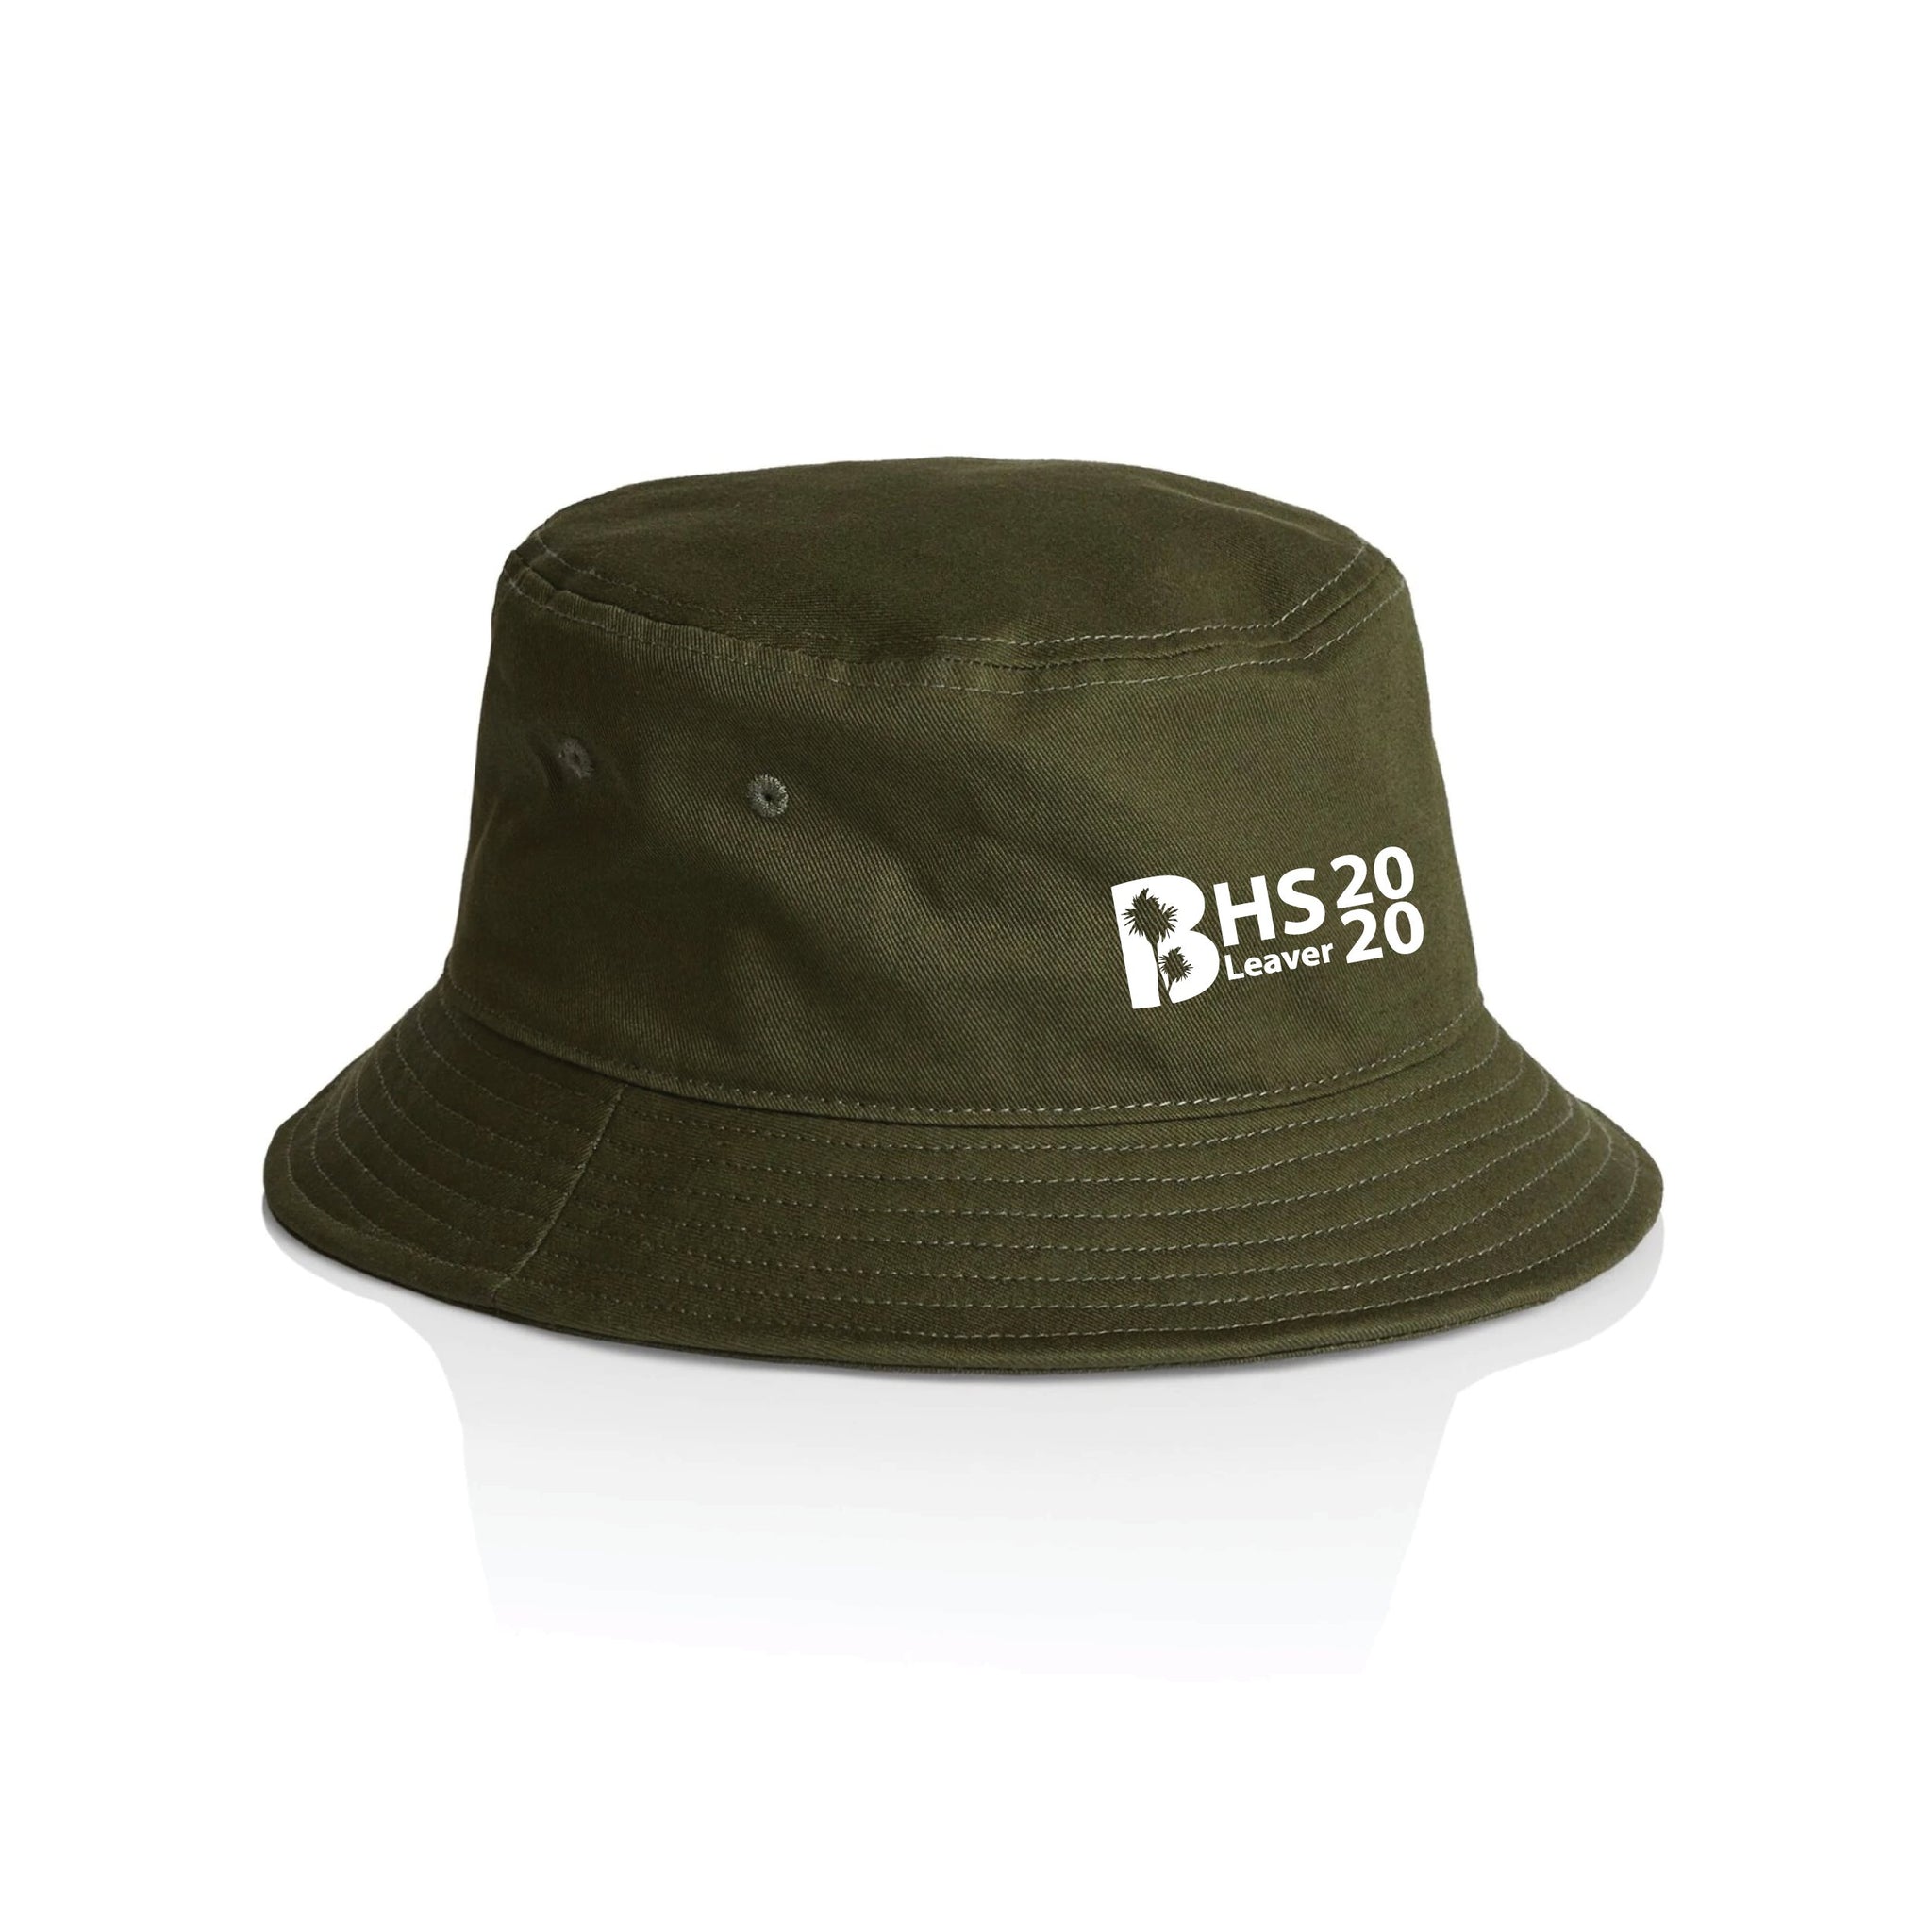 Hats - Burnside High School AS Colour Bucket Hat Black/Army